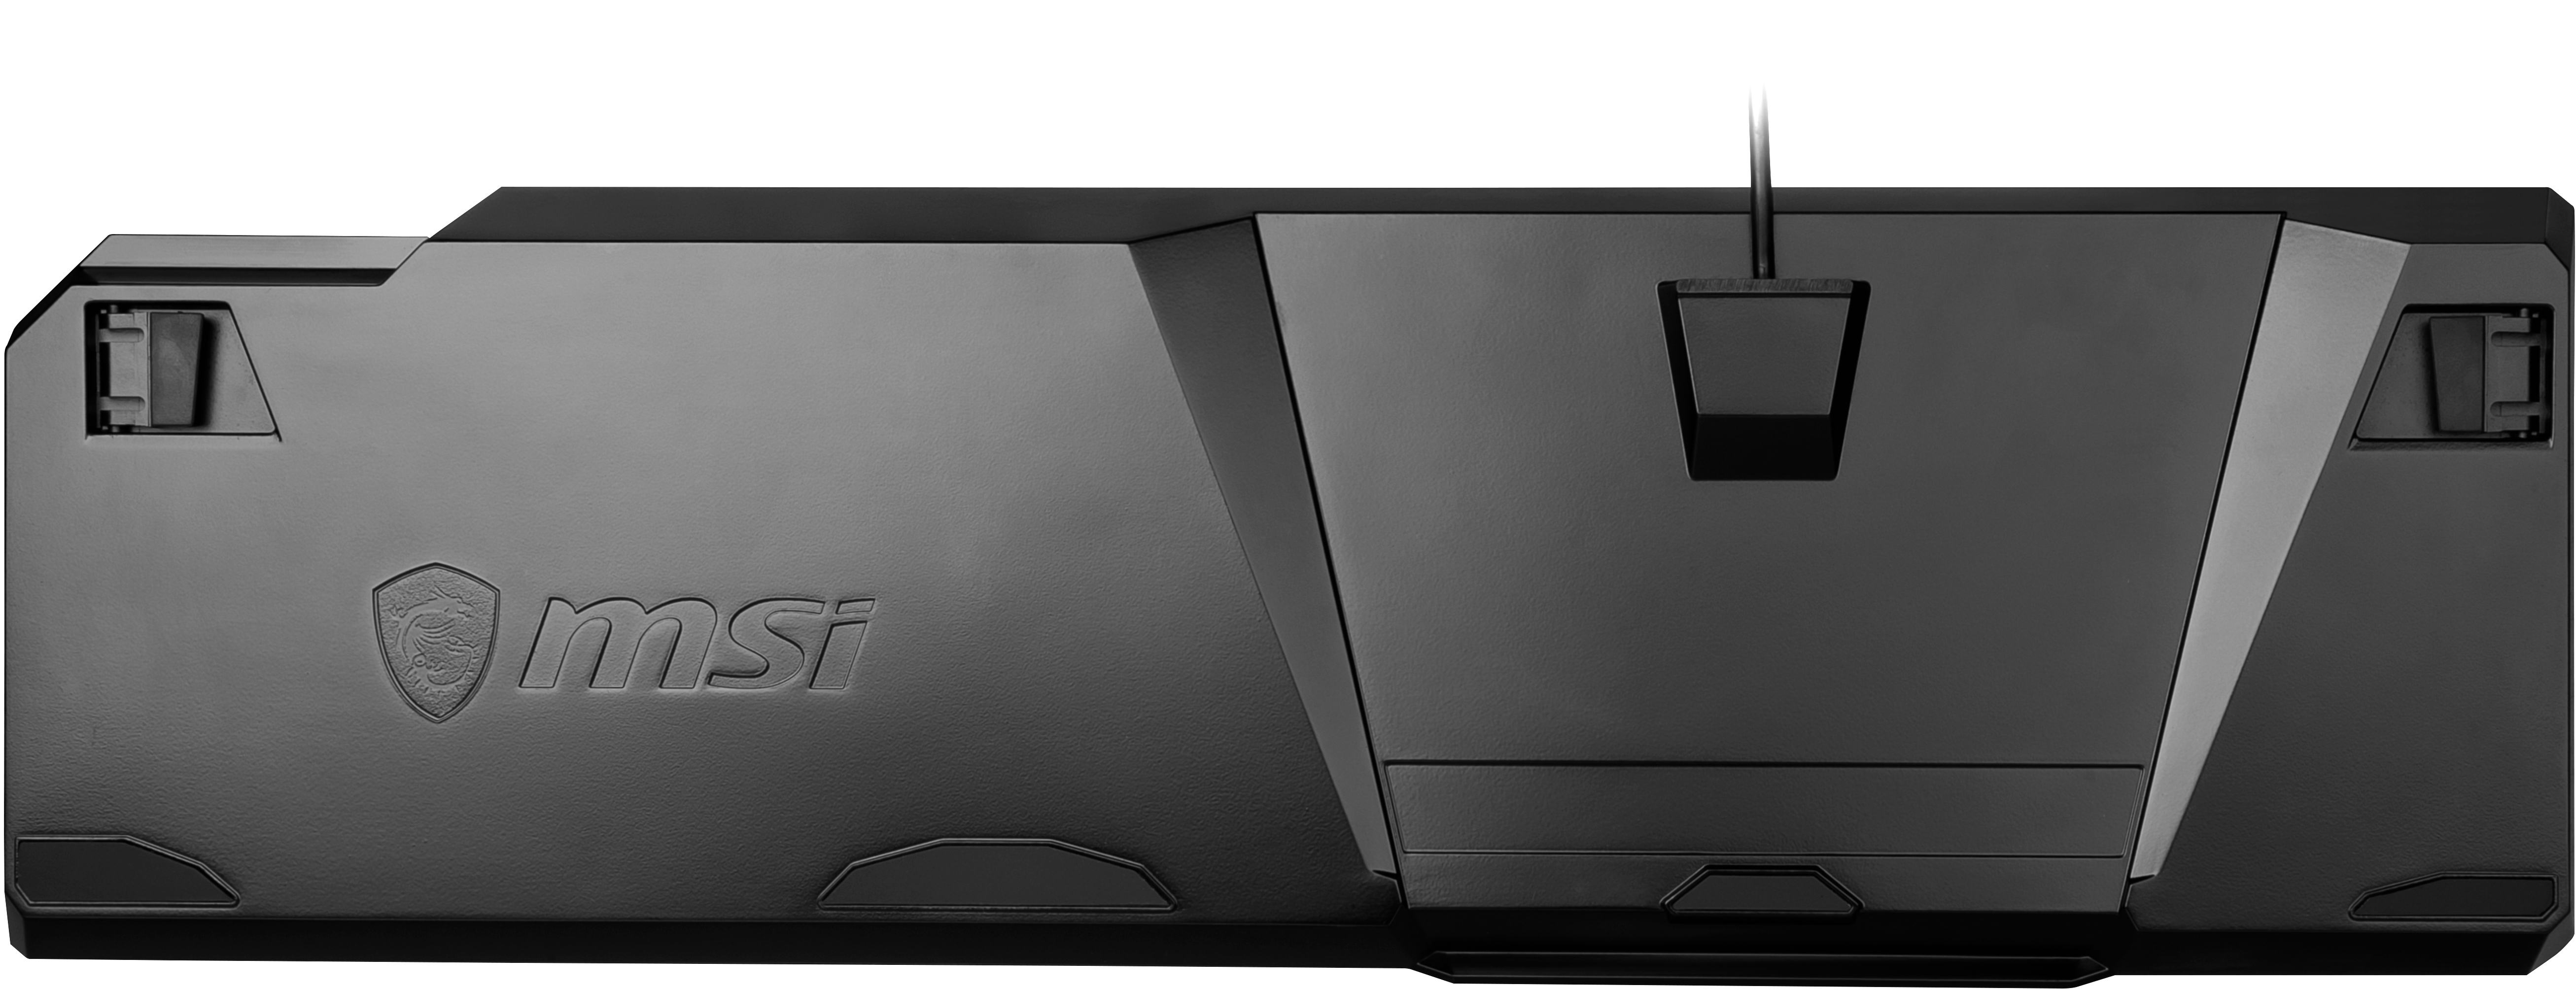 Kailh Layout, White Elite Tastatur schwarz, RGB Vigor QWERTZ (kabelgebunden, pro Taste) Gaming Switch, BW 50 Box DE GK MSI